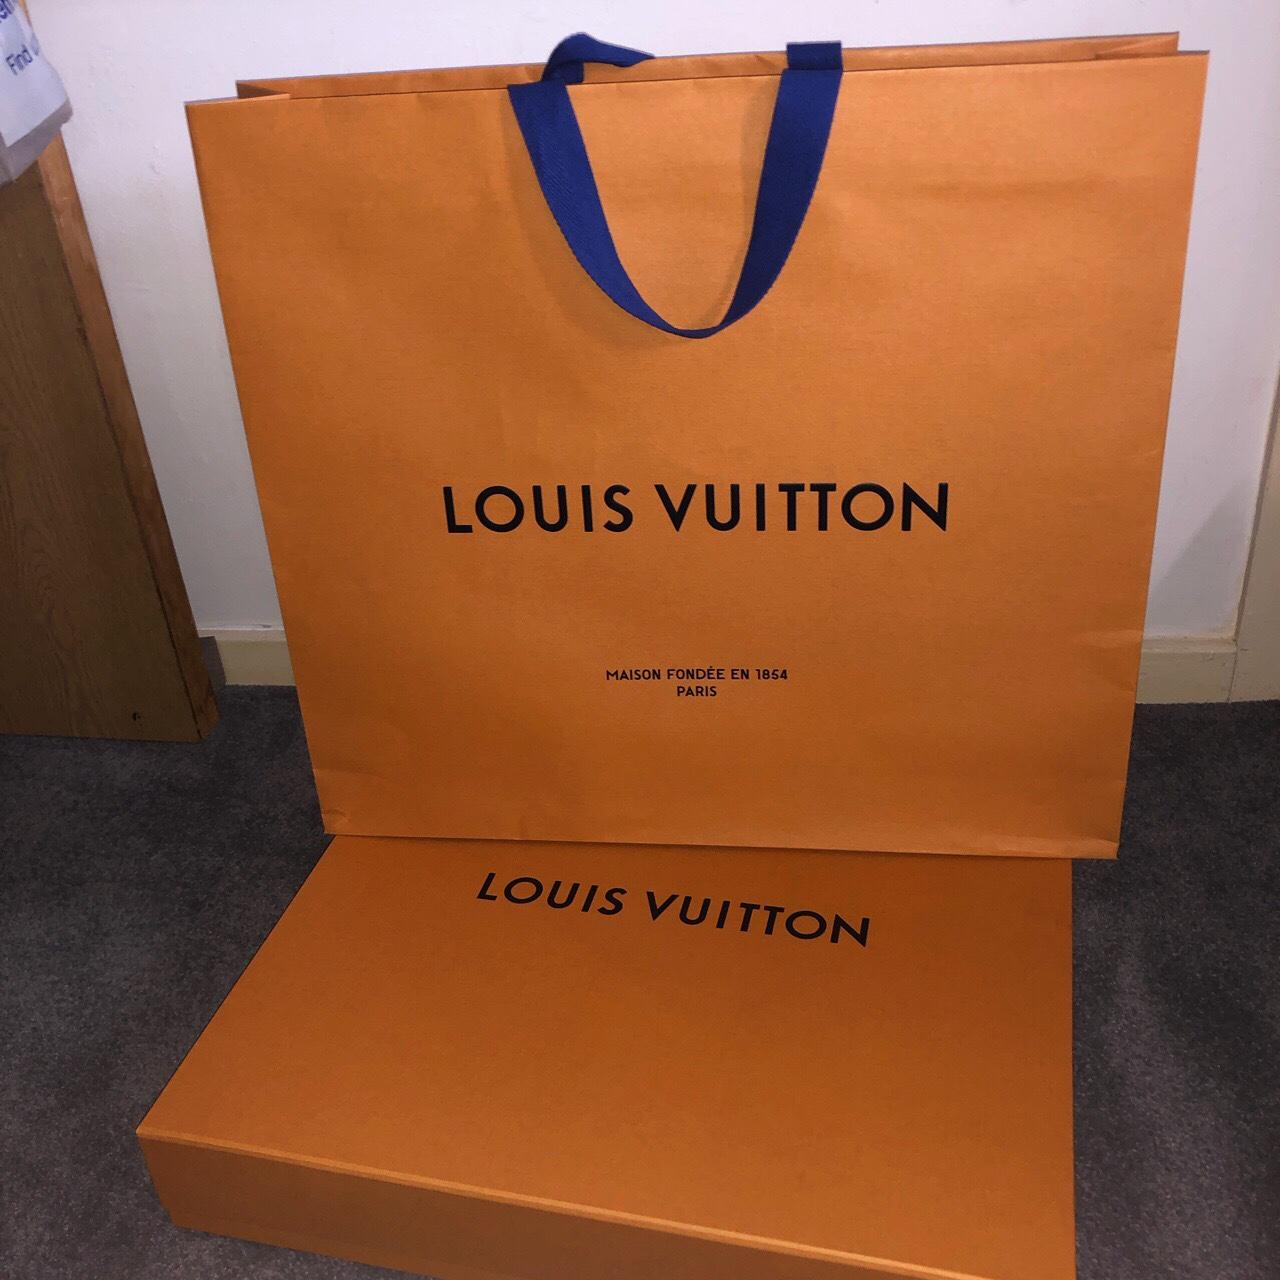 LOUIS VUITTON GIFT packaging Genuine LOUIS VUITTON gift sets £40.00 -  PicClick UK